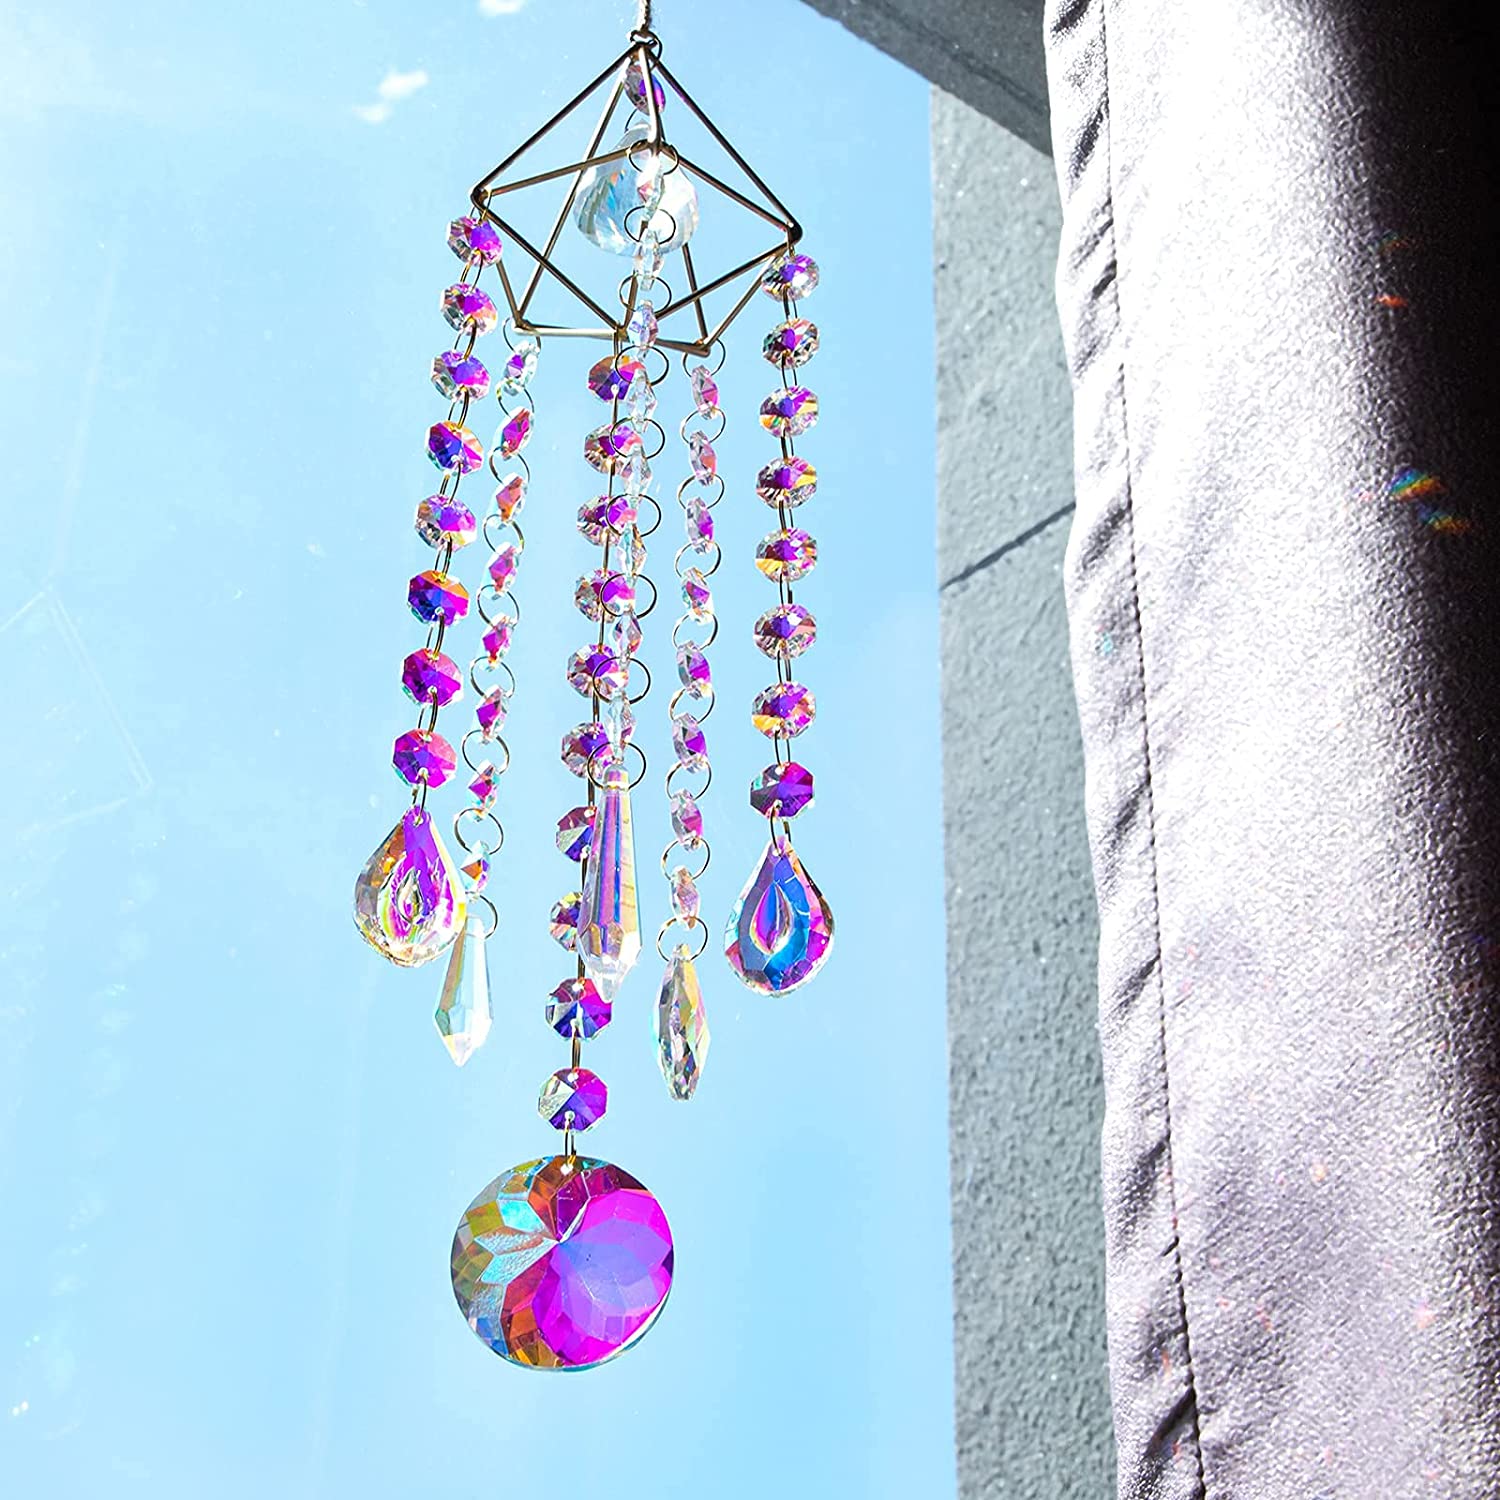 H&D HYALINE & DORA Garden Suncatchers Window Hanging Crystal Chandeliers Prisms Rainbow Pendant Crystal Light Catcher Ornament,12pcs